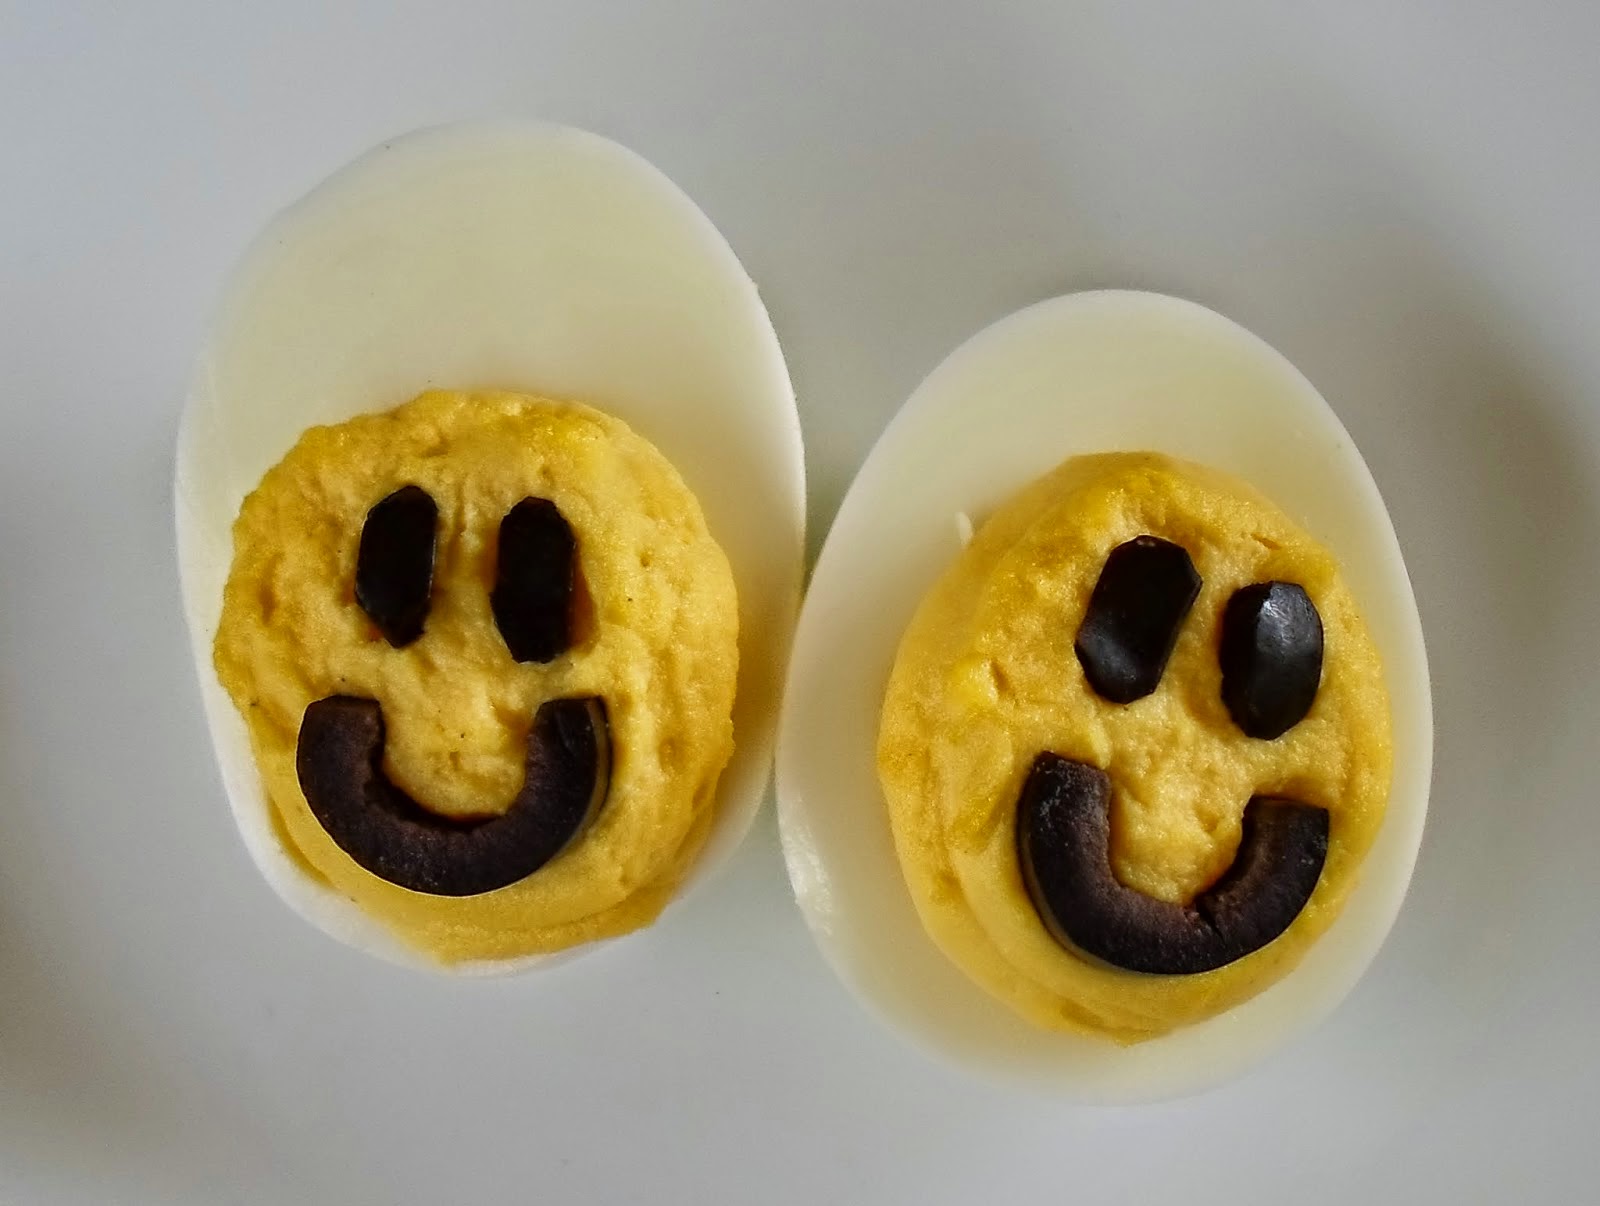 http://happierthanapiginmud.blogspot.com/2014/08/smiley-face-deviled-eggs.html